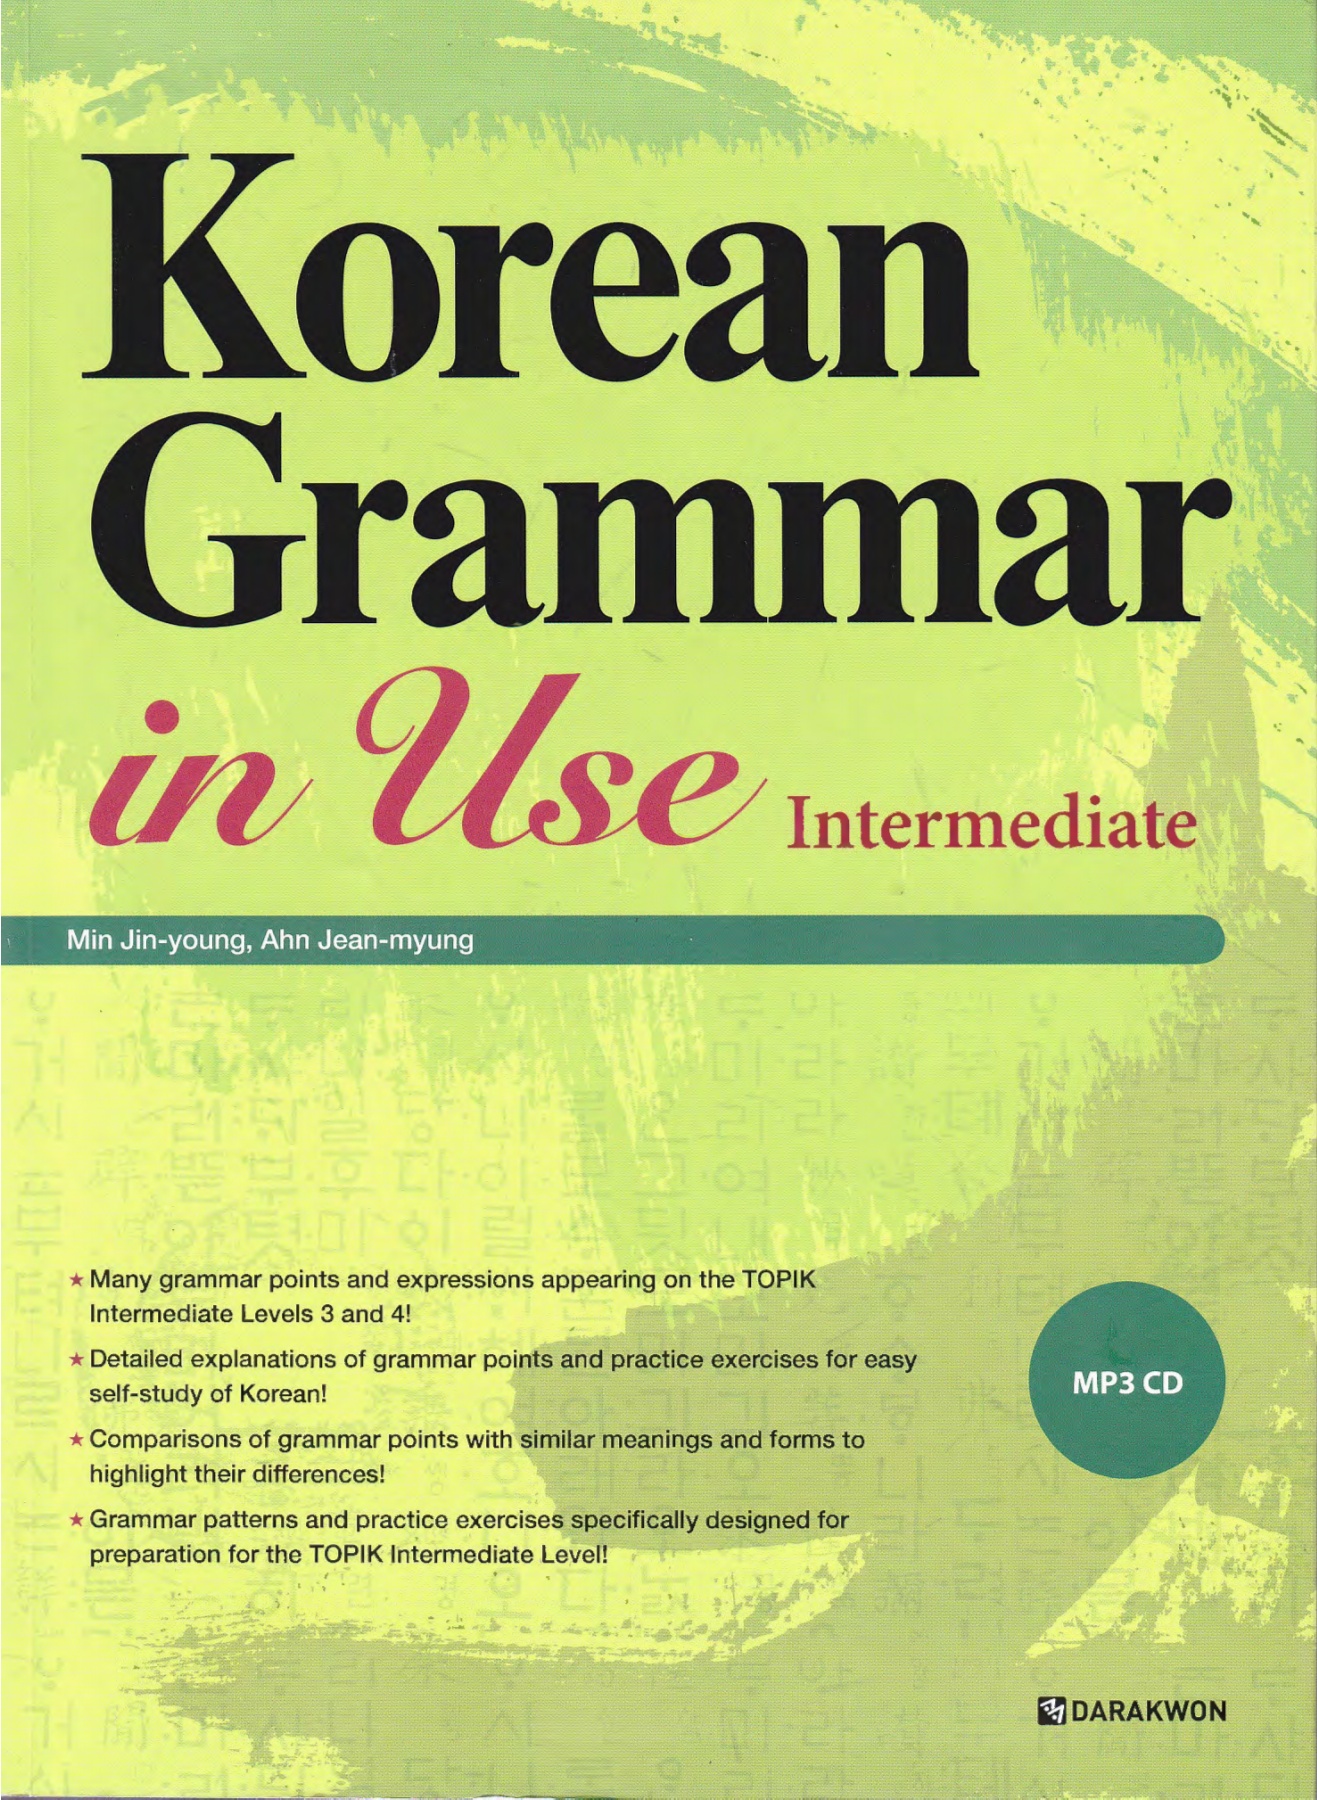 Min Jin-young & Ahn Jean-myung - Korean grammar in use